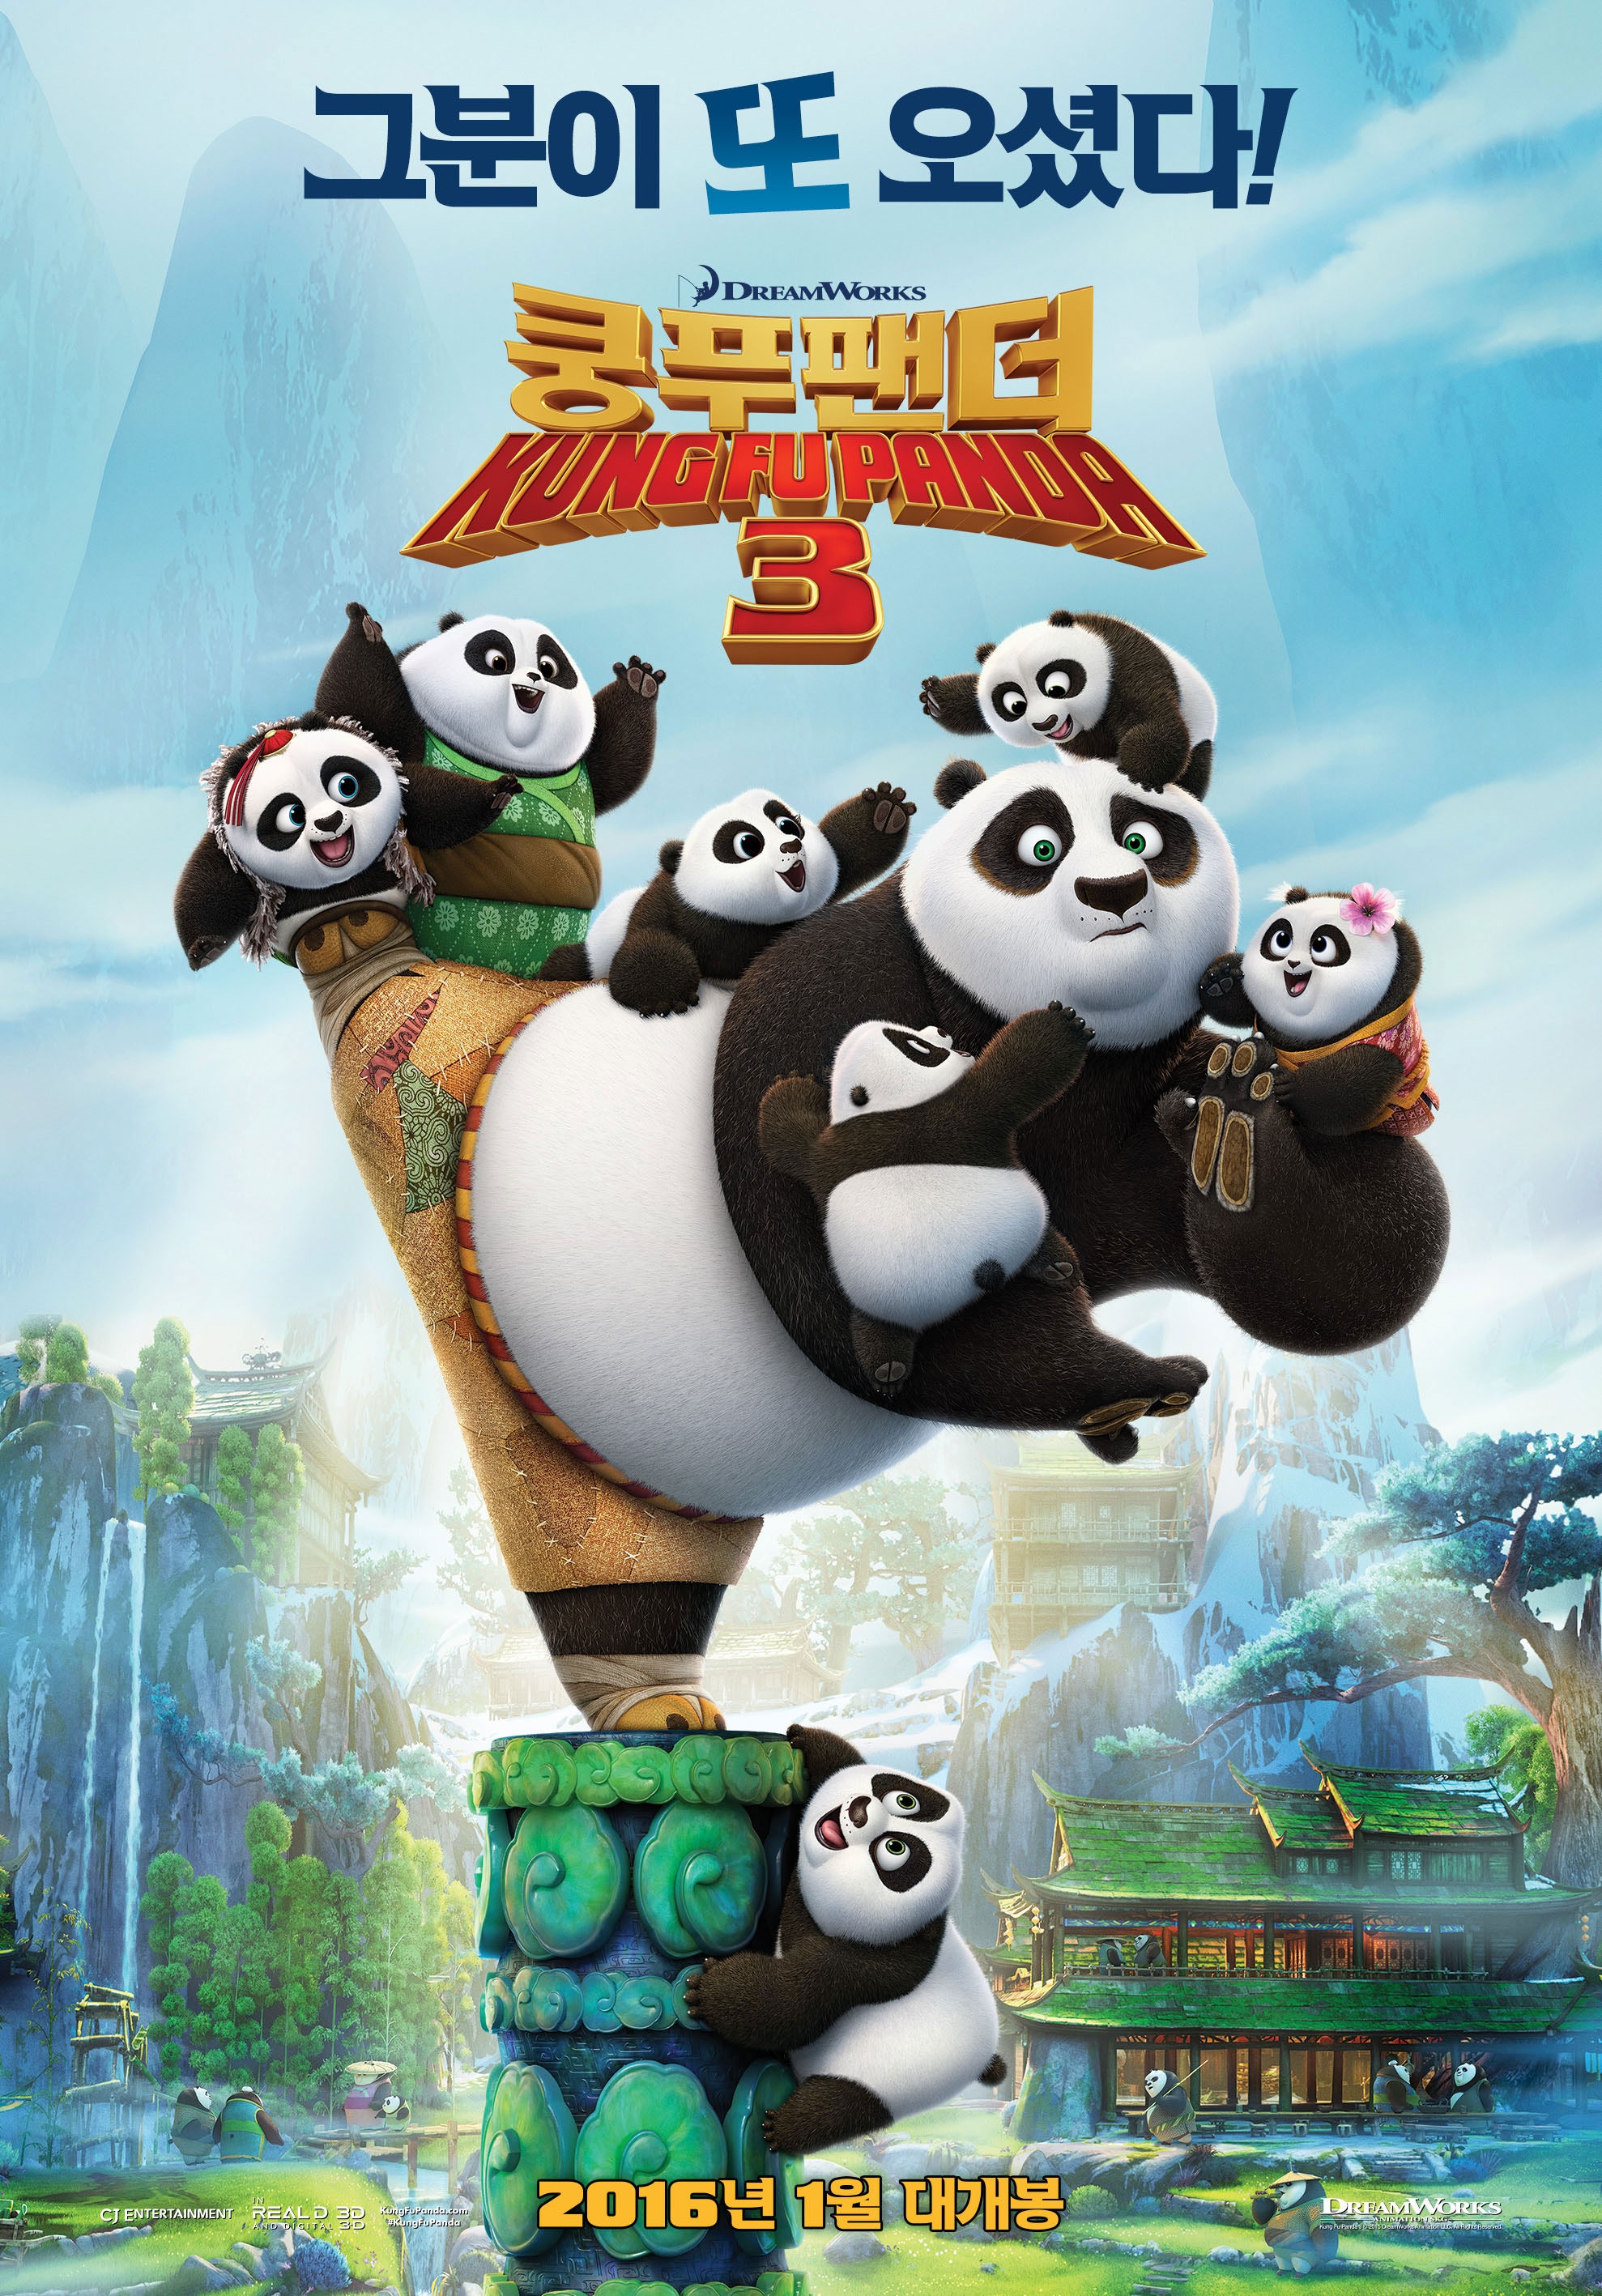 Kung fu panda: sinopsis, reparto, frases, personajes, y mucho mas